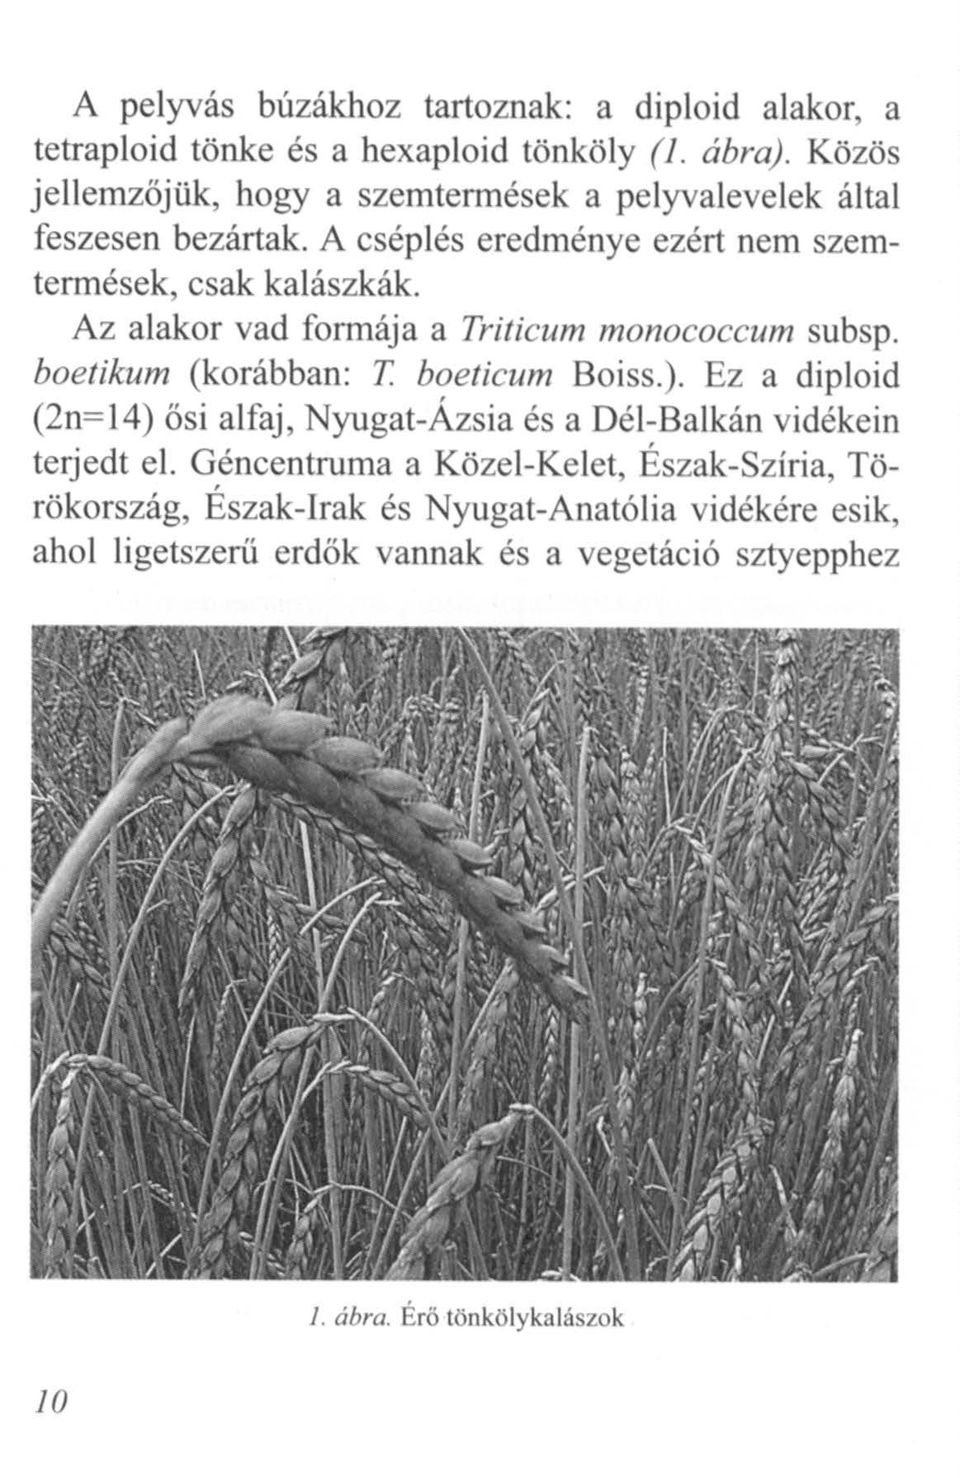 Az alakor vad formája a Triticum monococcum subsp. boetikum (korábban: T boeticum Boiss.).